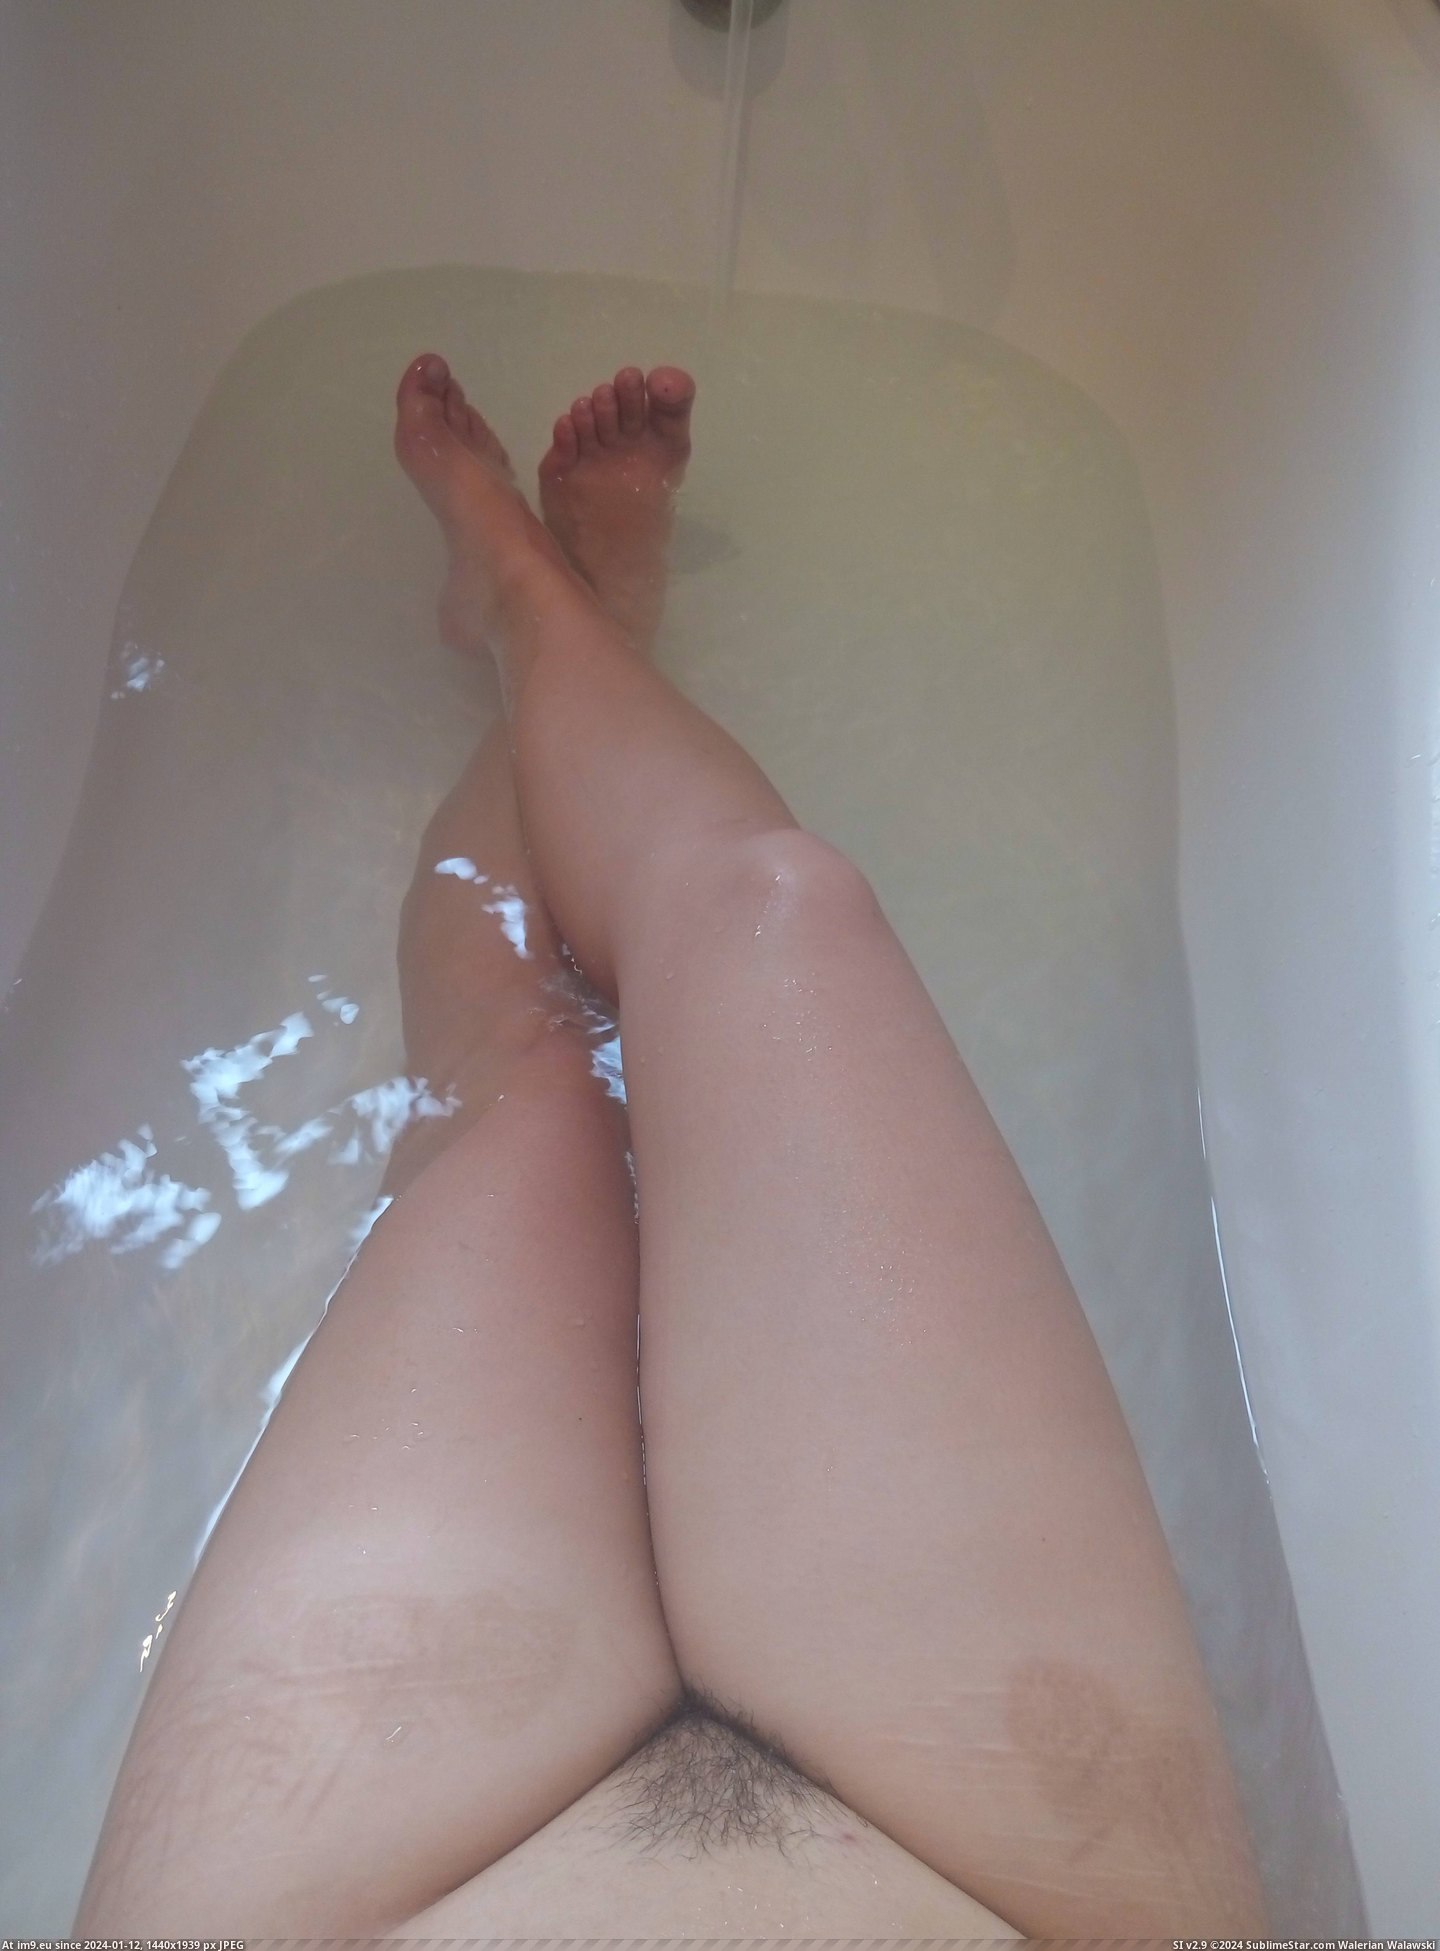 #Nsfw #Legs #Silky #Bath #Soft [Nsfw] My legs are especially soft and silky after a bath Pic. (Bild von album My r/NSFW favs))